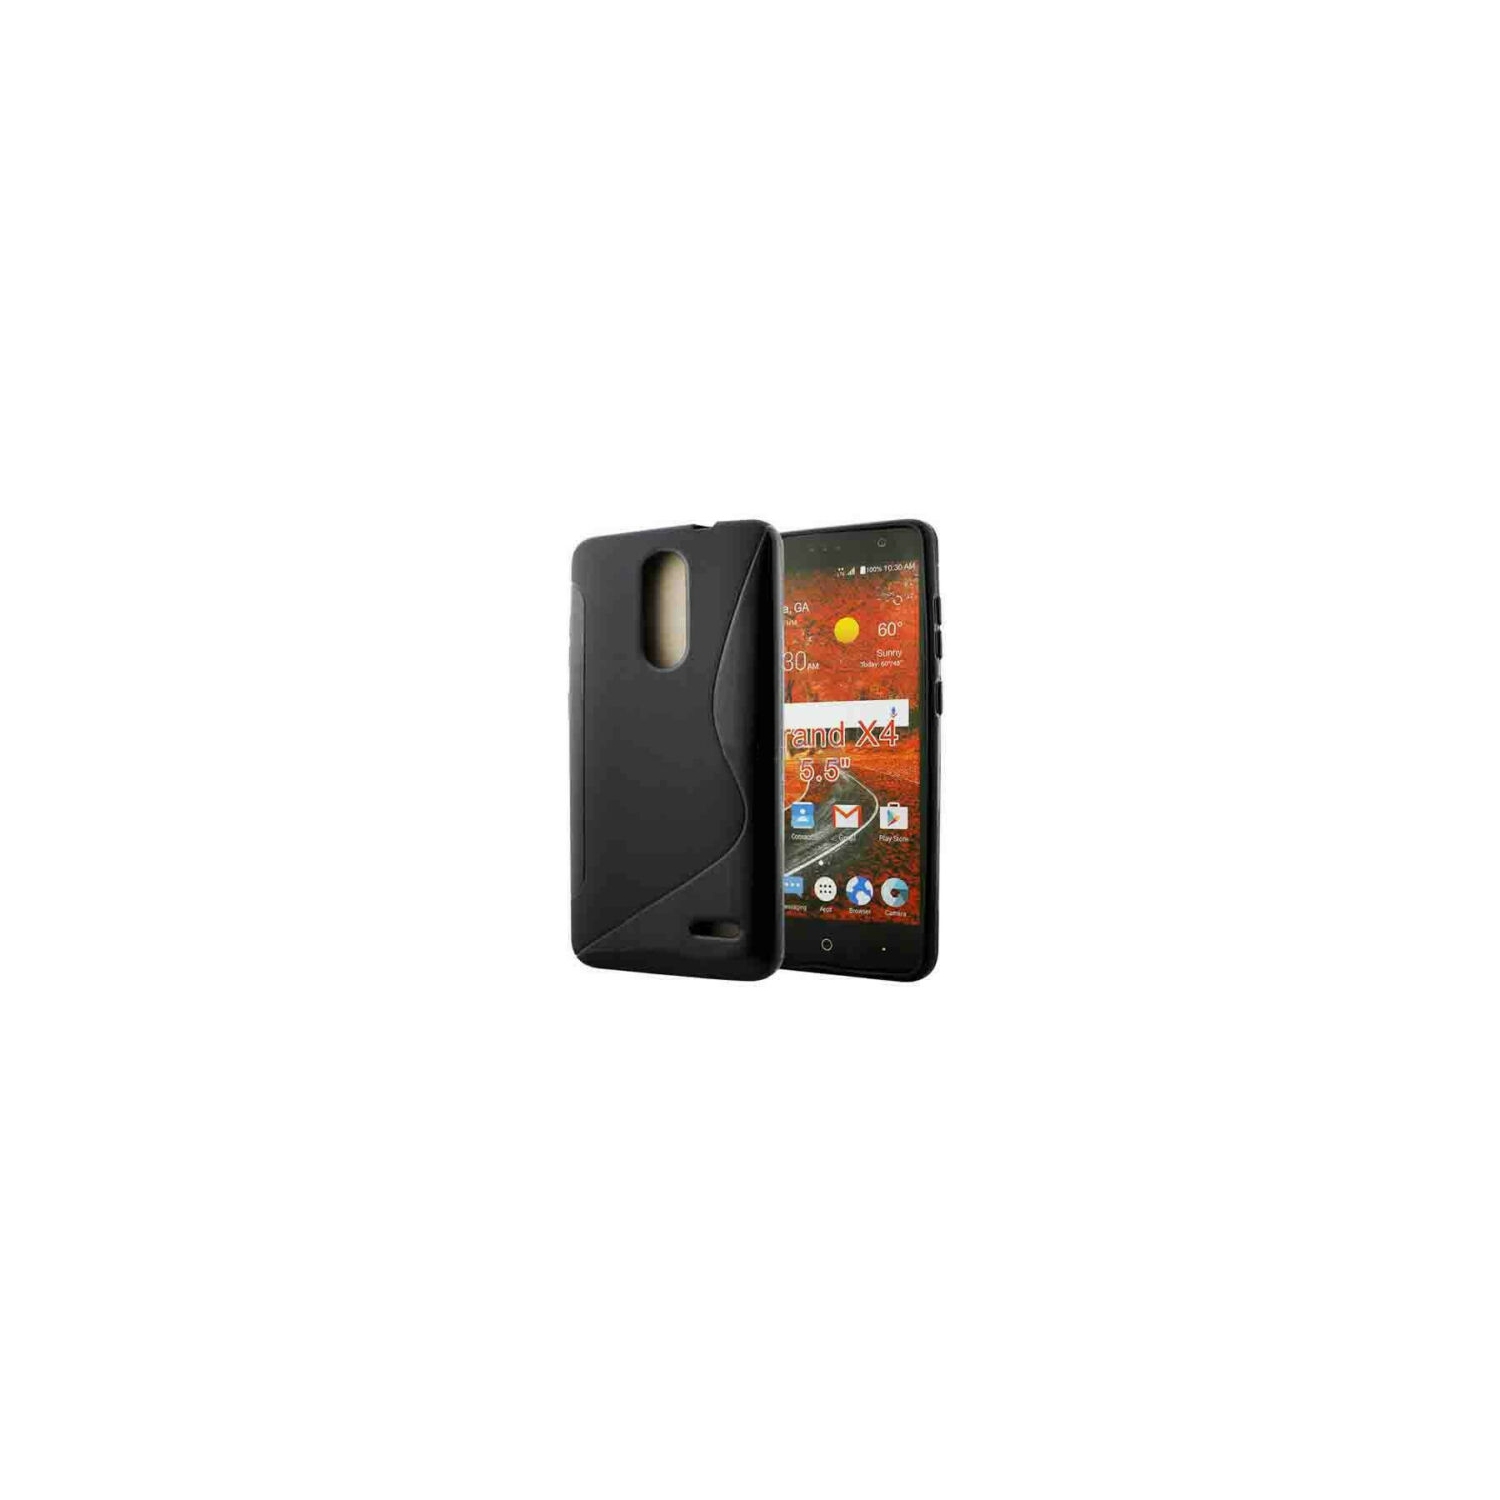 【CSmart】 Ultra Thin Soft TPU Silicone Jelly Bumper Back Cover Case for ZTE Grand X4, Black